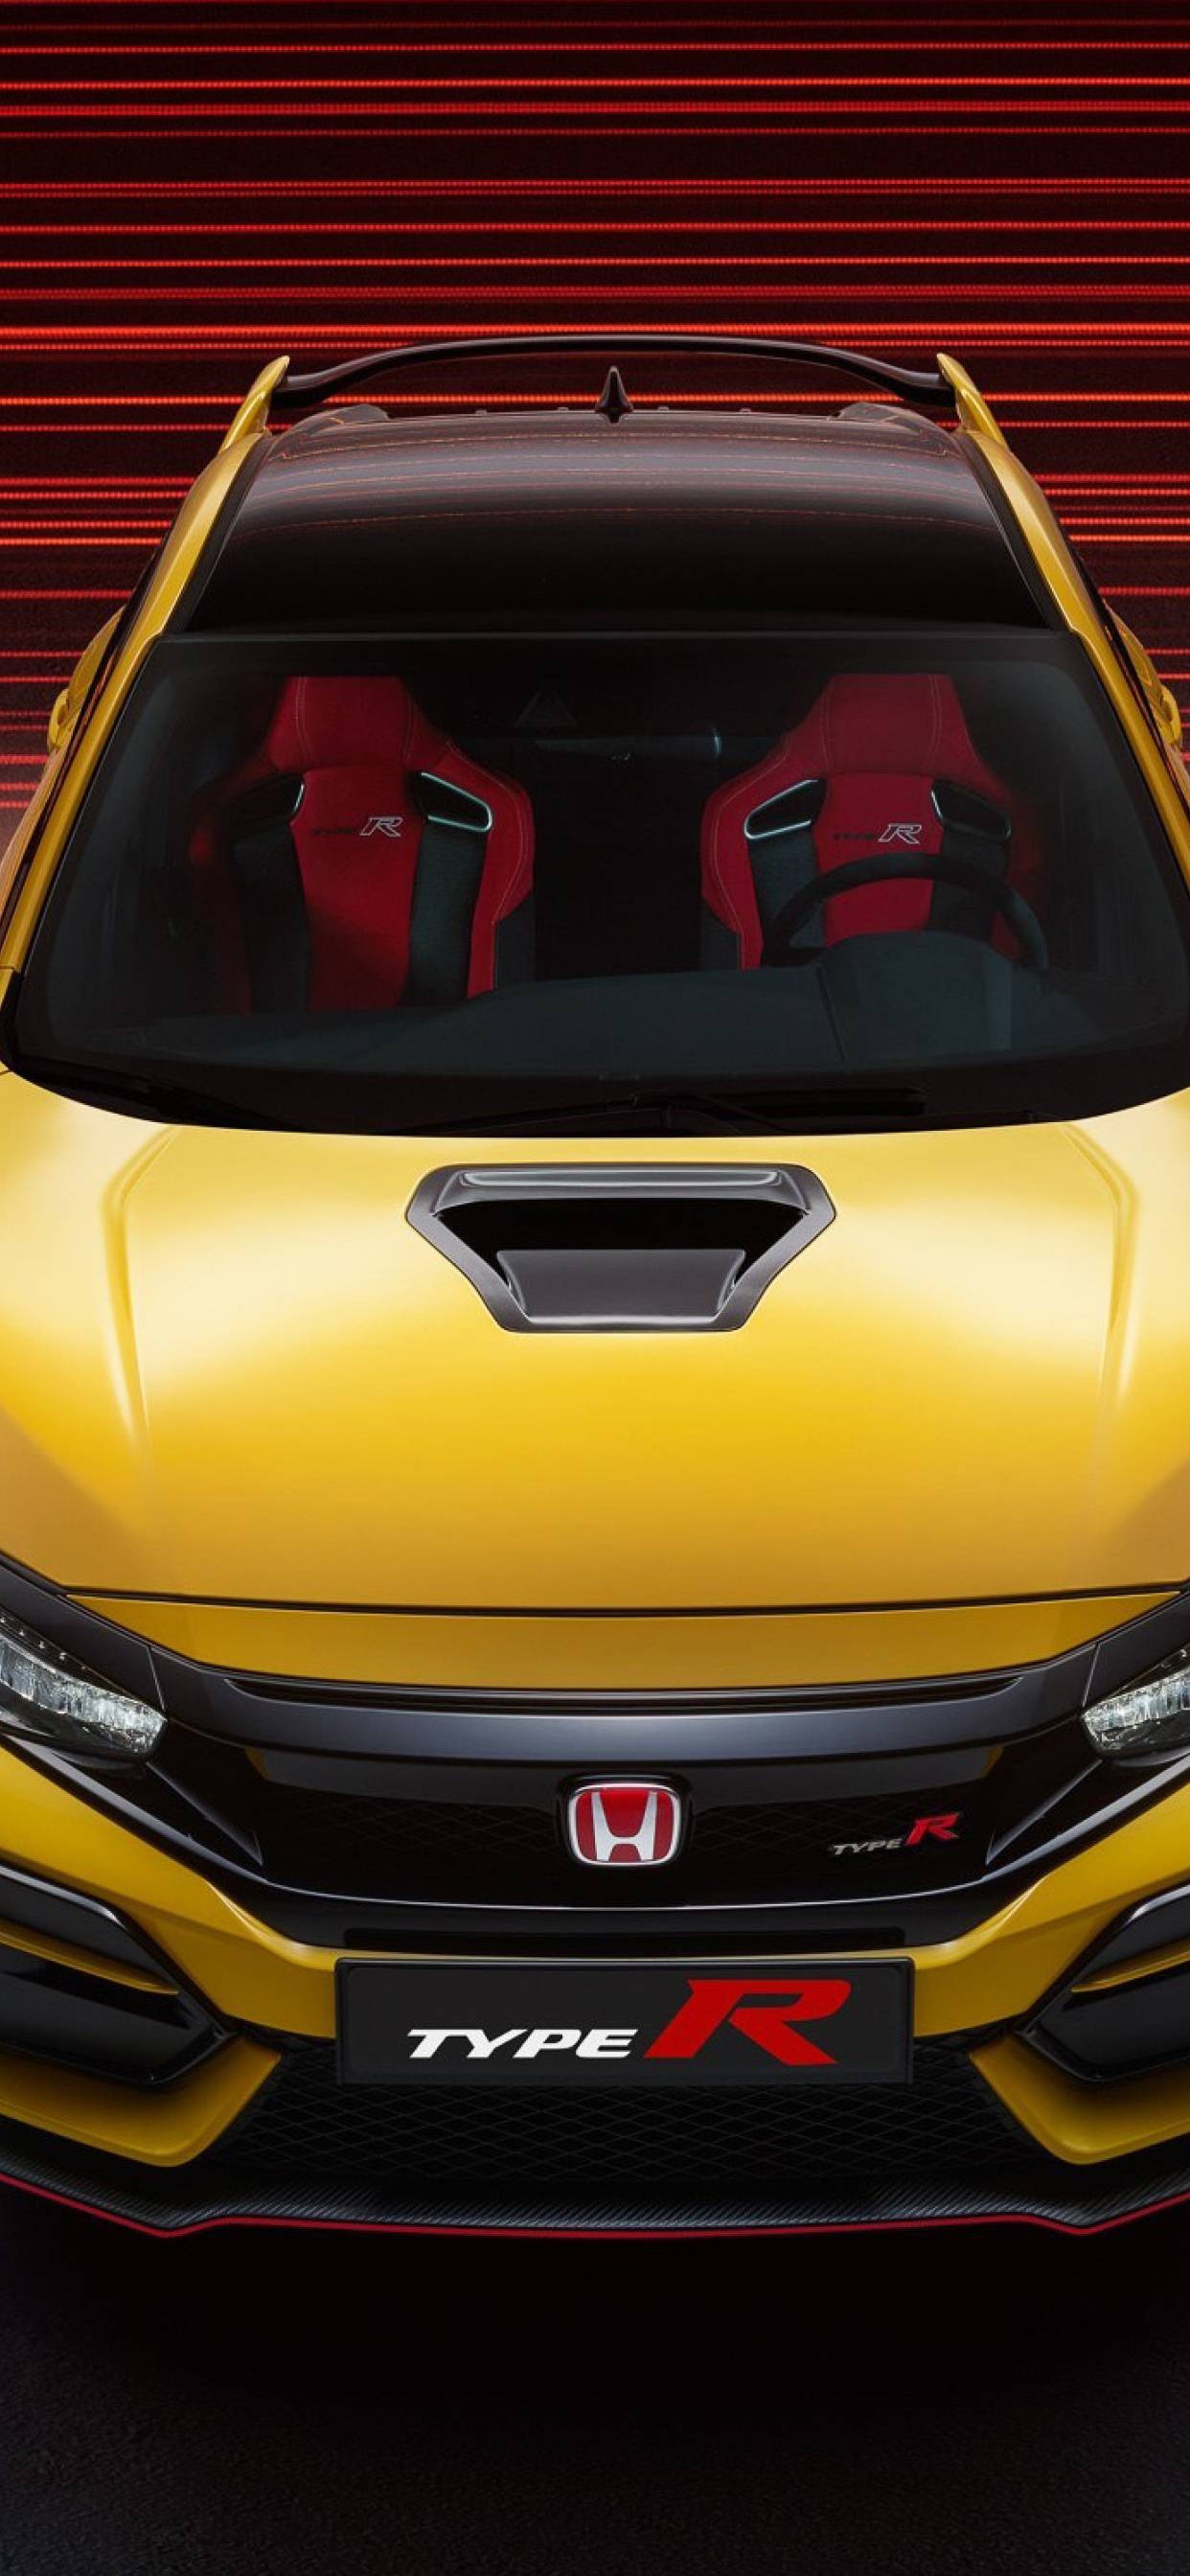 Honda logo, Auto brand, iPhone wallpapers, Stylish graphics, 1250x2690 HD Handy